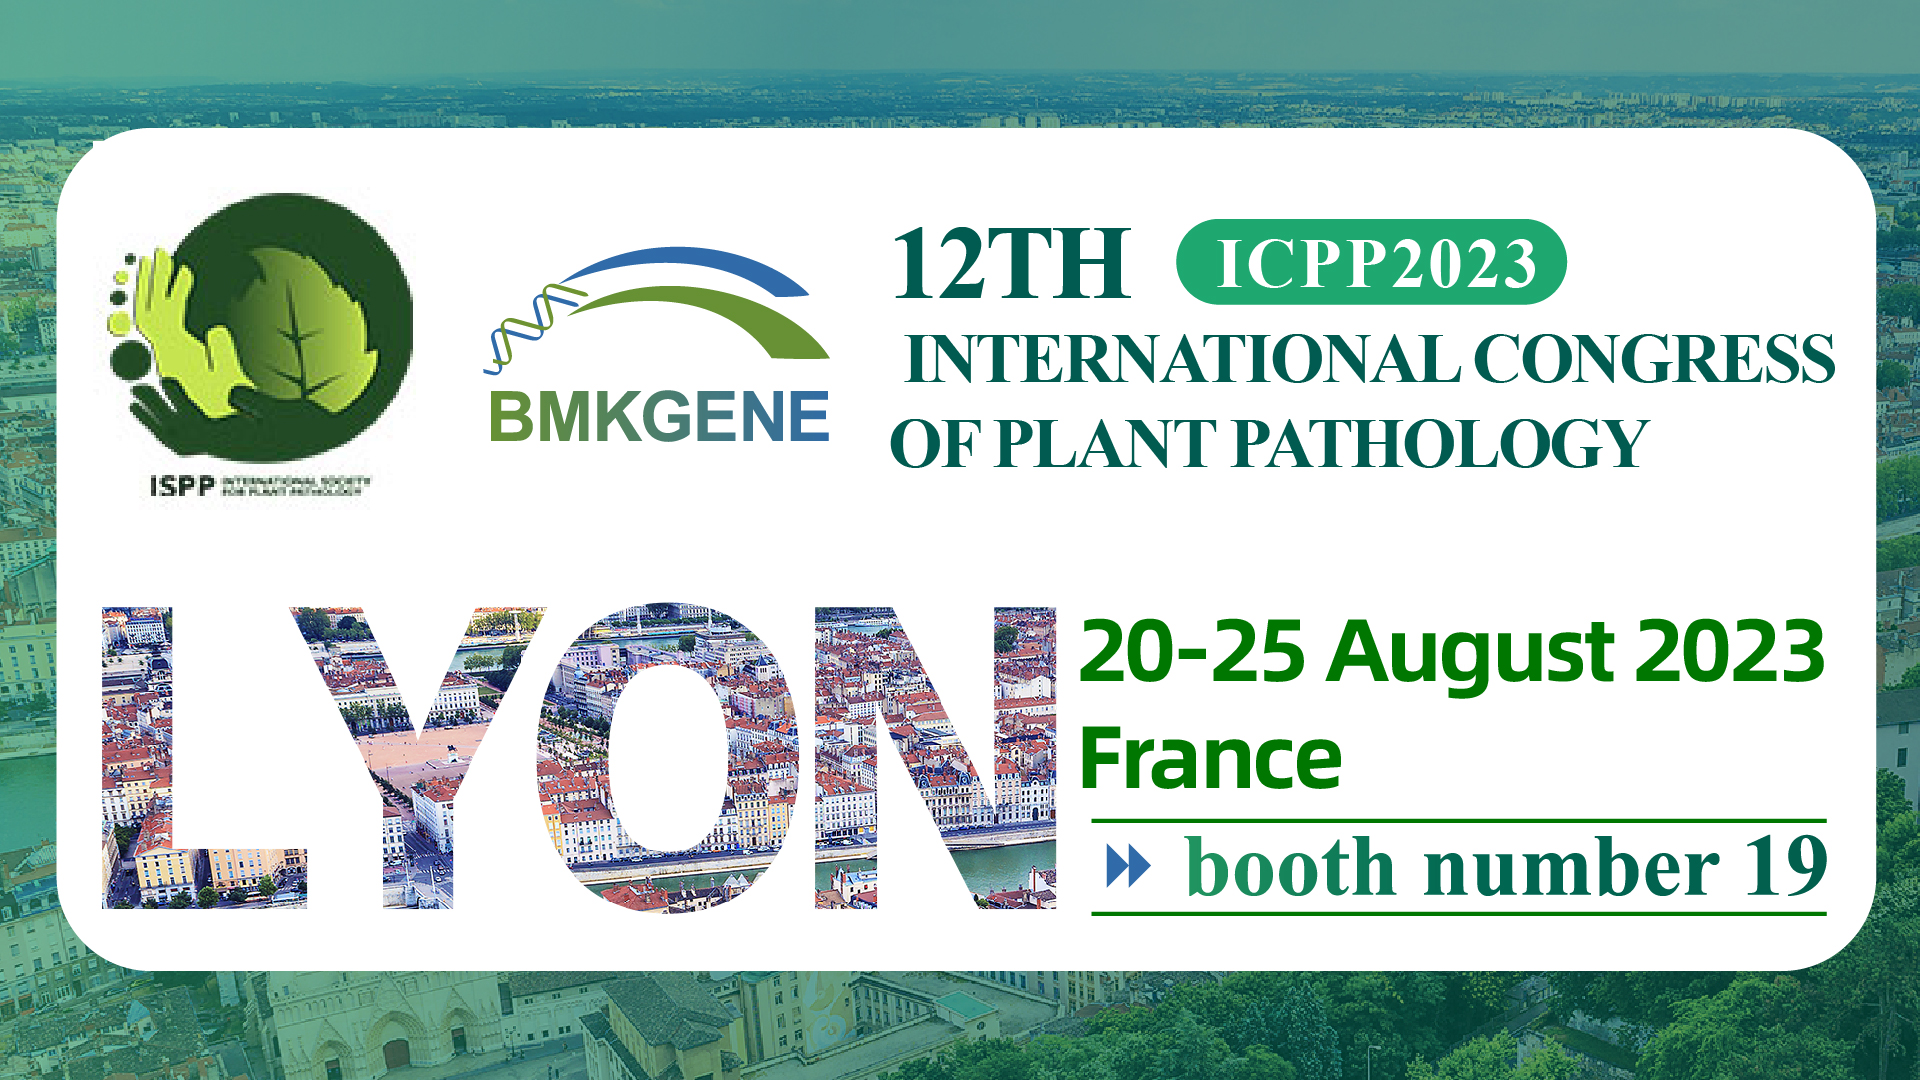 ICPP2023—12TH INTERNATIONAL CONGRESS OF PLANT PATHOLOGY